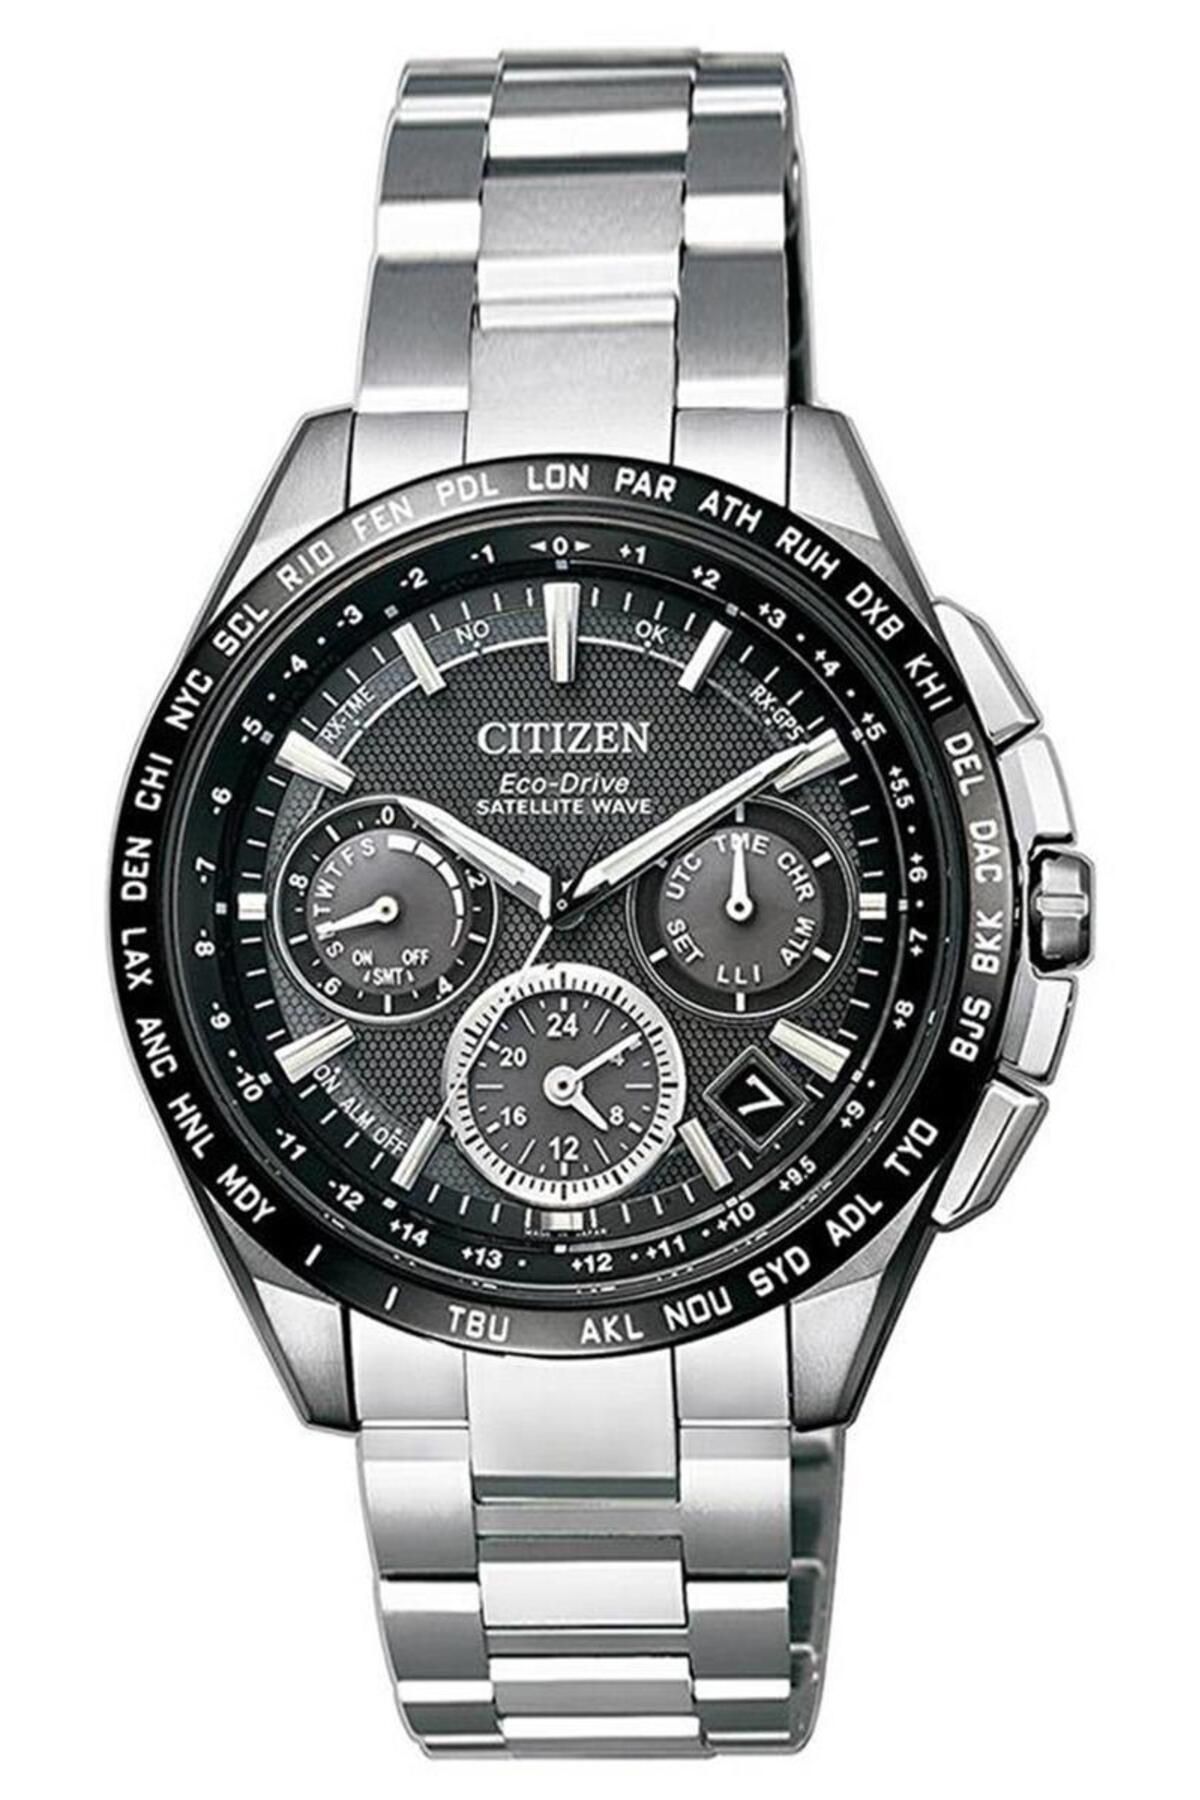 Японские наручные часы citizen. Наручные часы Citizen Eco-Drive. Cb5001-57e. Часы Ситизен Eco Drive. Часы Ситизен Сателлит Вэйв.